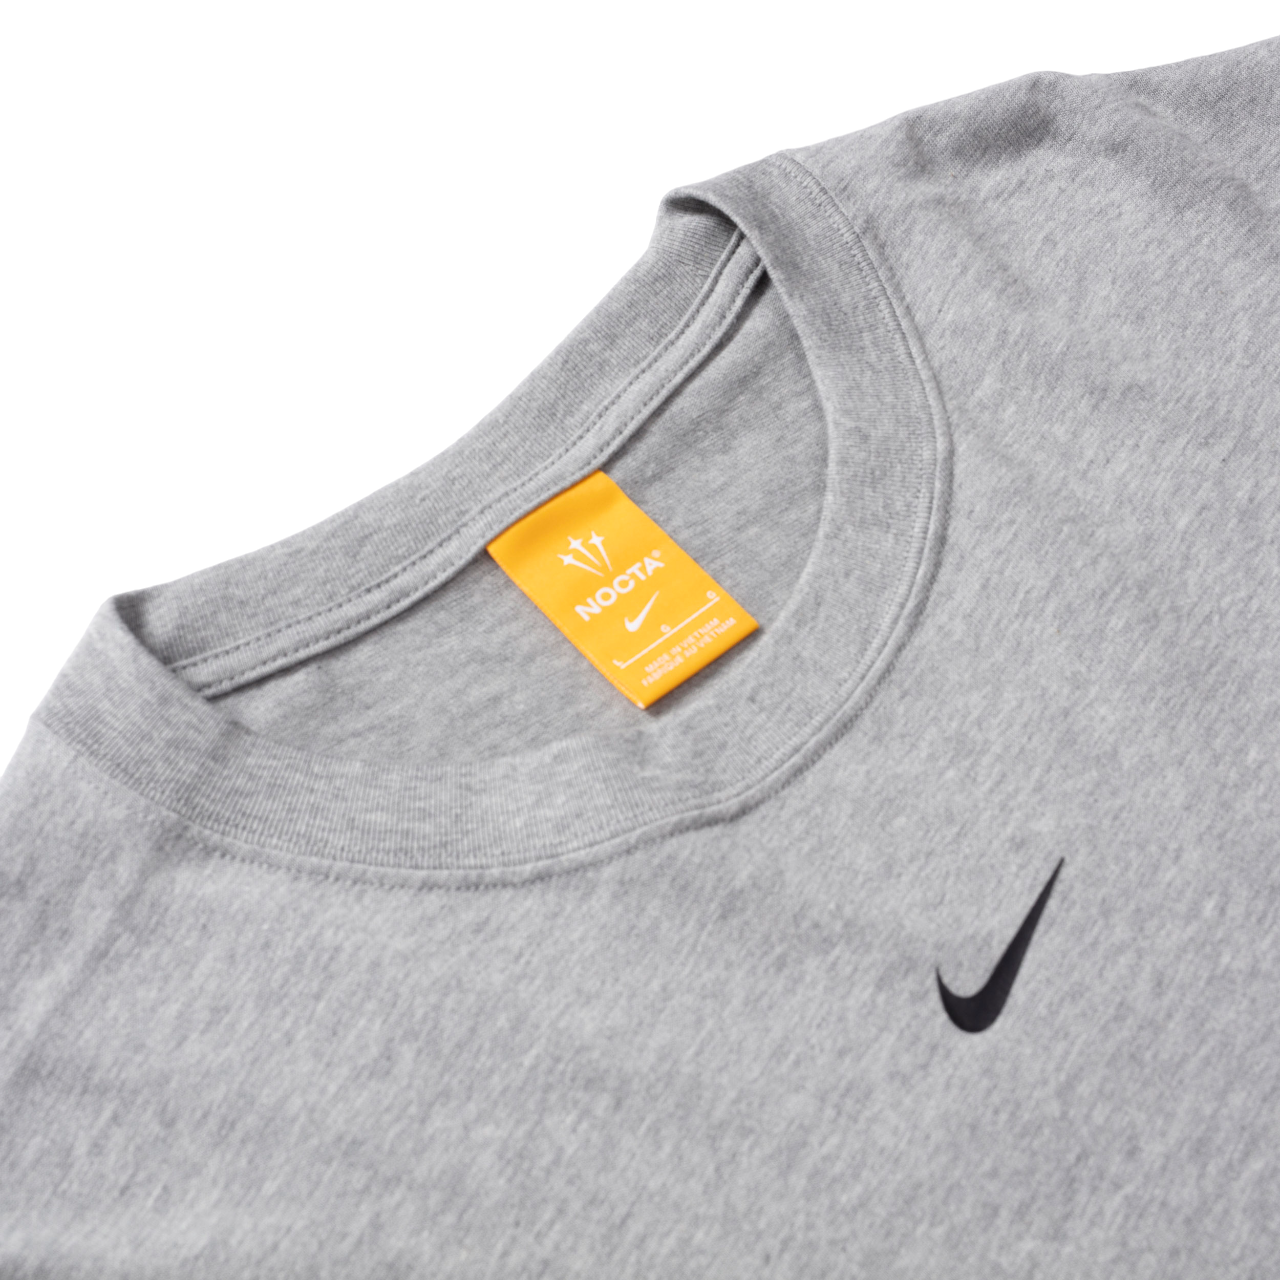 Nike x Nocta Max 90 T-Shirt Grey